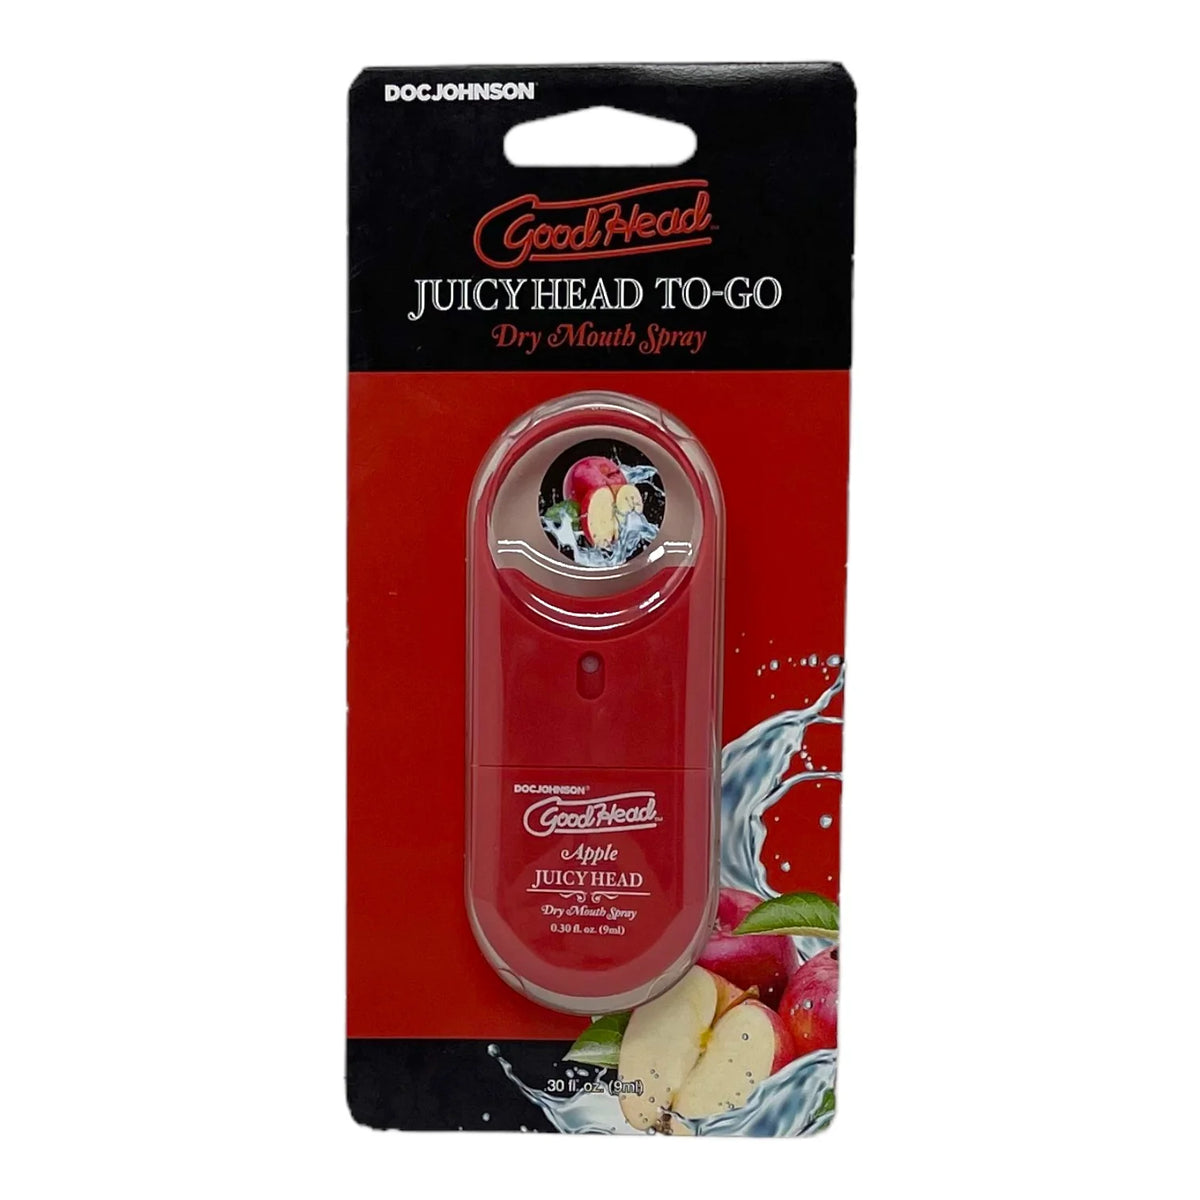 GoodHead Juicy Head To-Go (Spray para boca Seca)